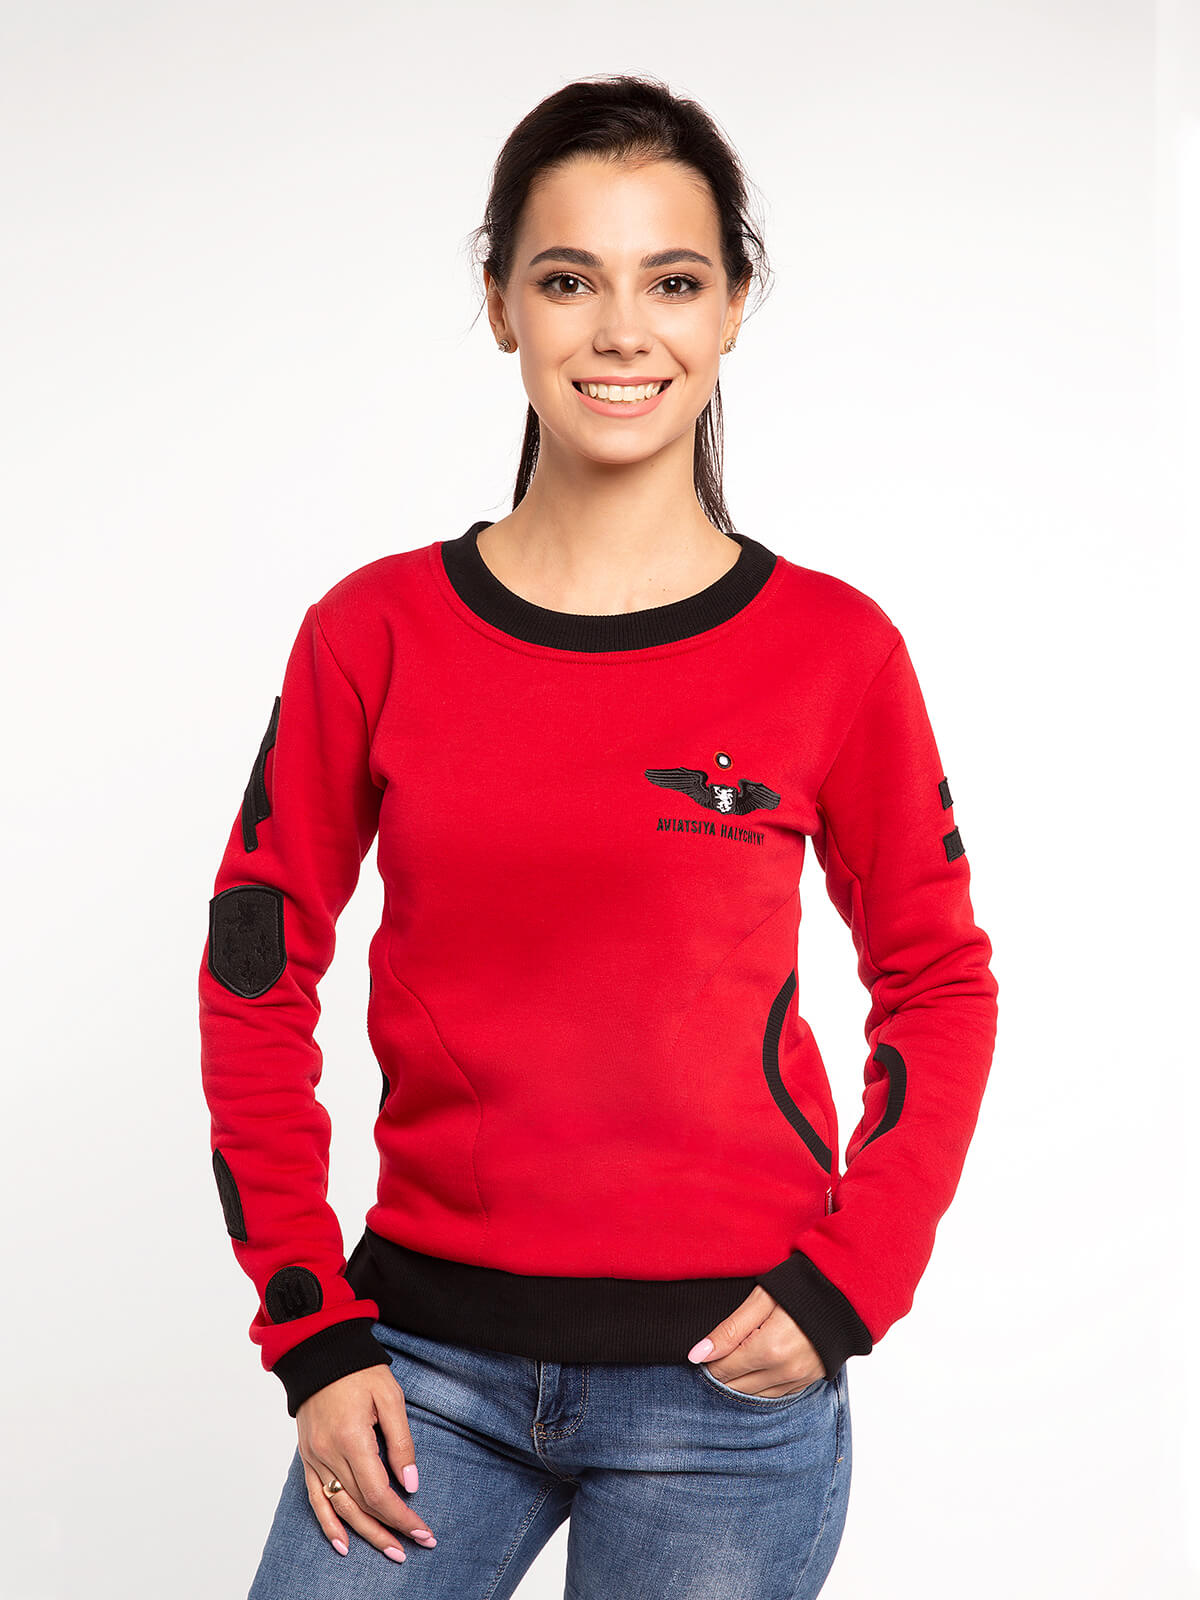 Women's Sweatshirt Ua. Color red. Three-cord thread fabric: 77% cotton, 23% polyester.